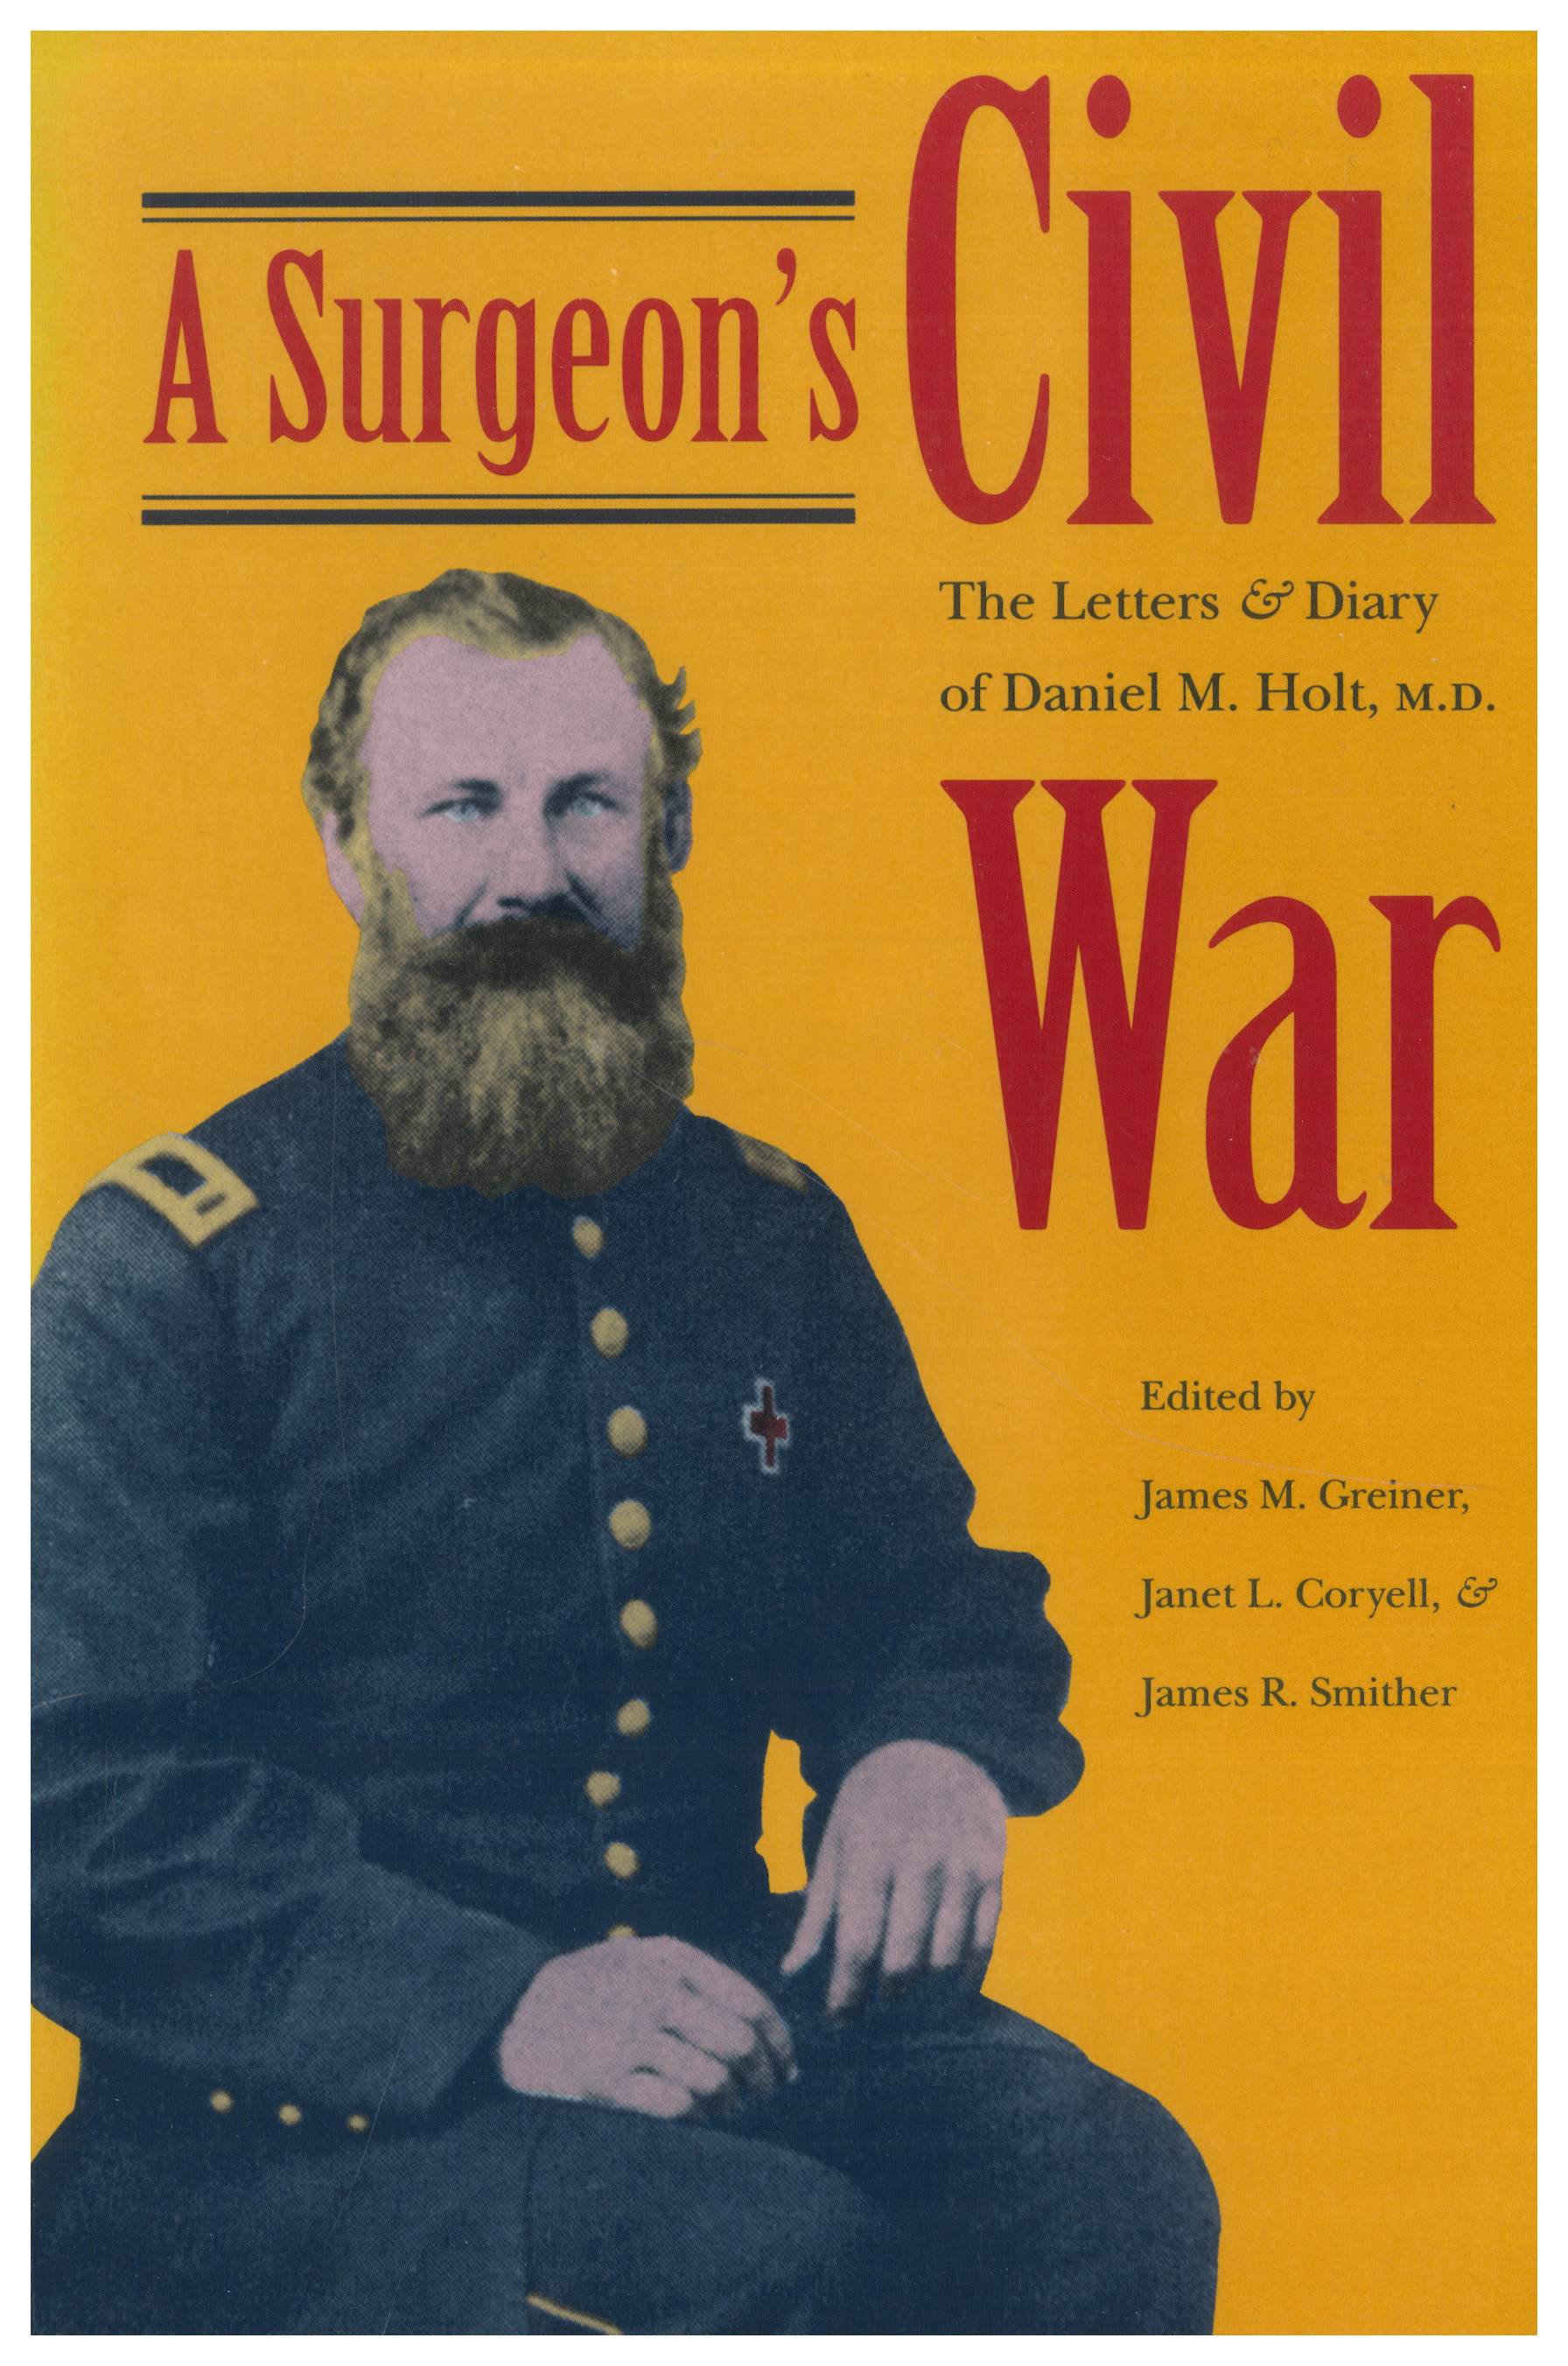 A Surgeon's Civil War